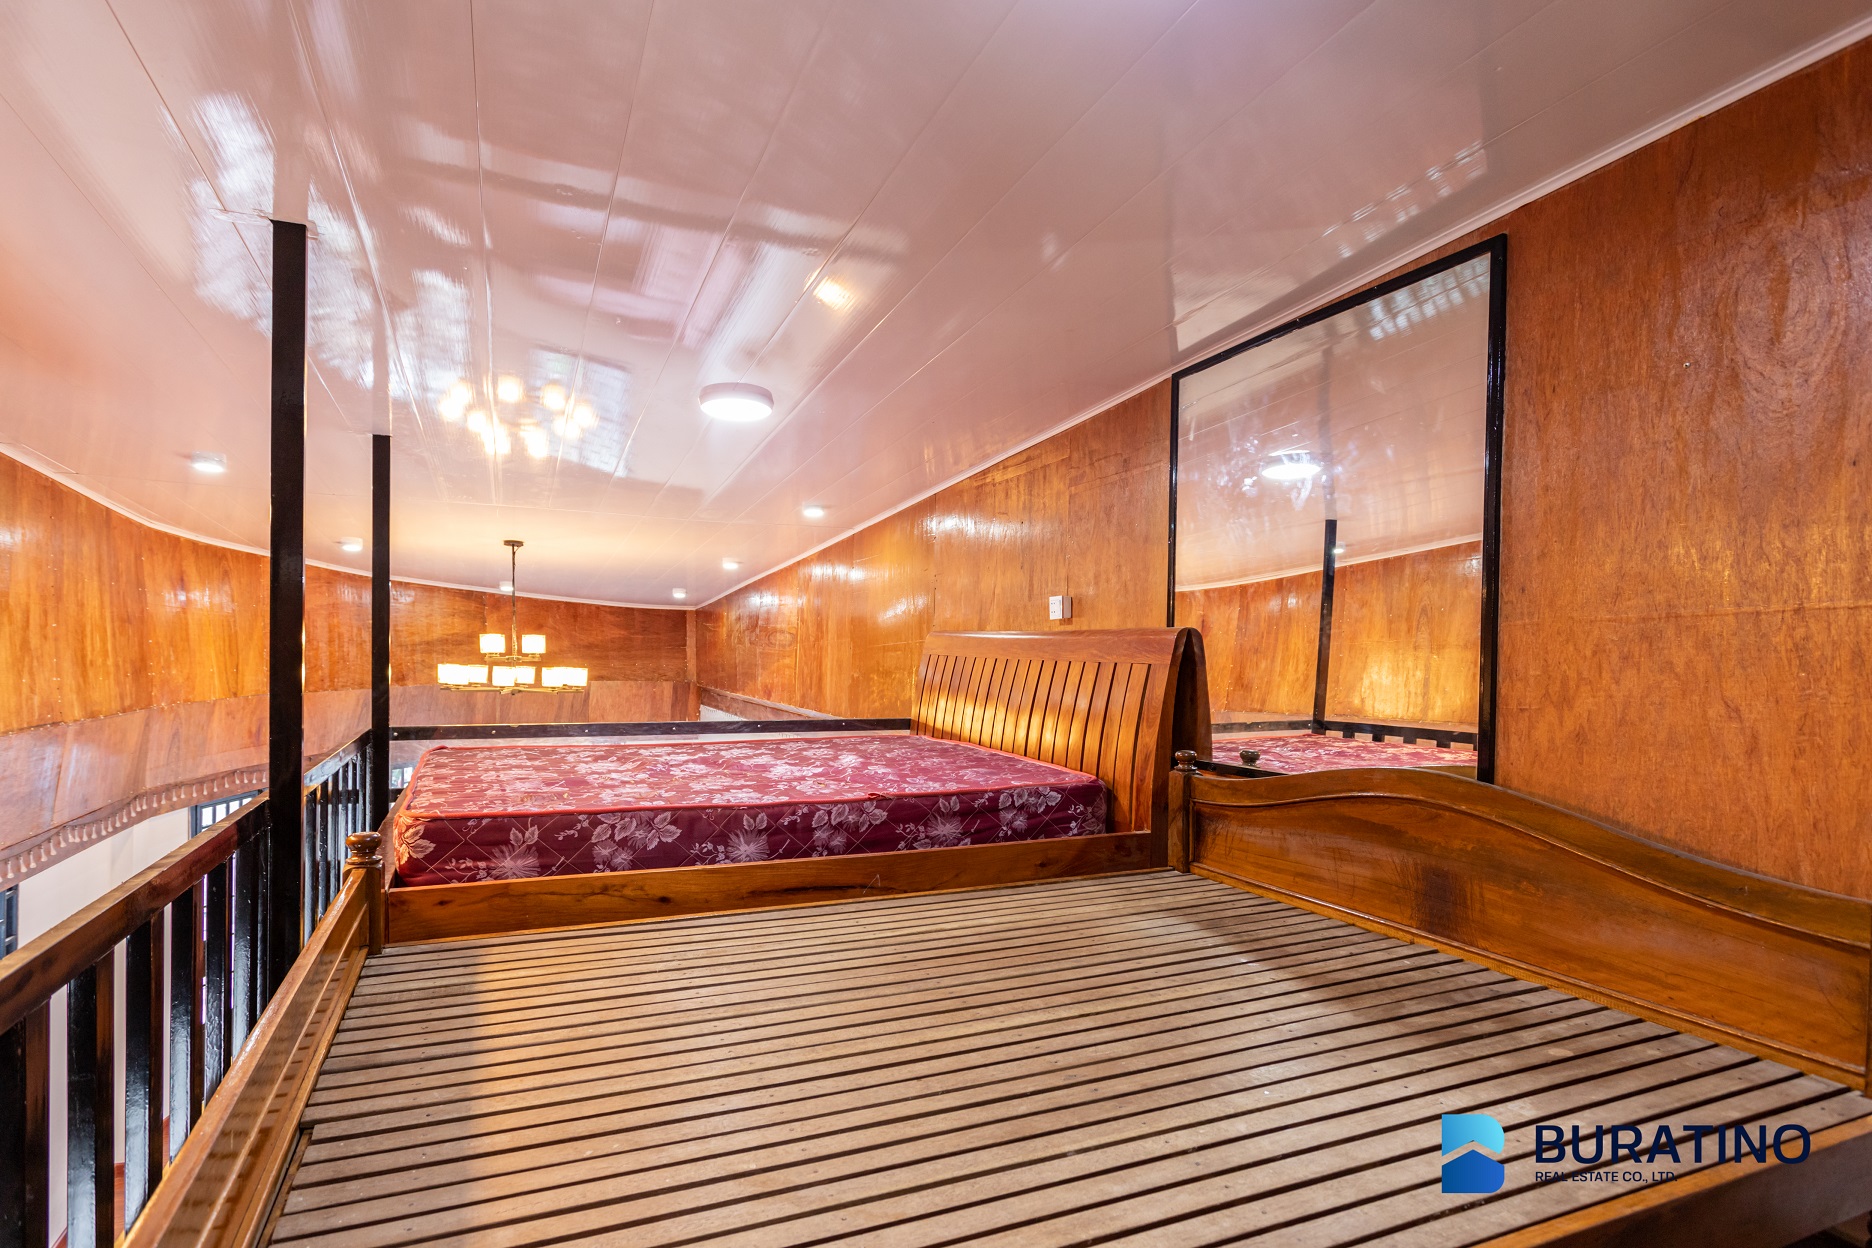 One bedroom of three floor for sale, Khan Tuol Kork-3